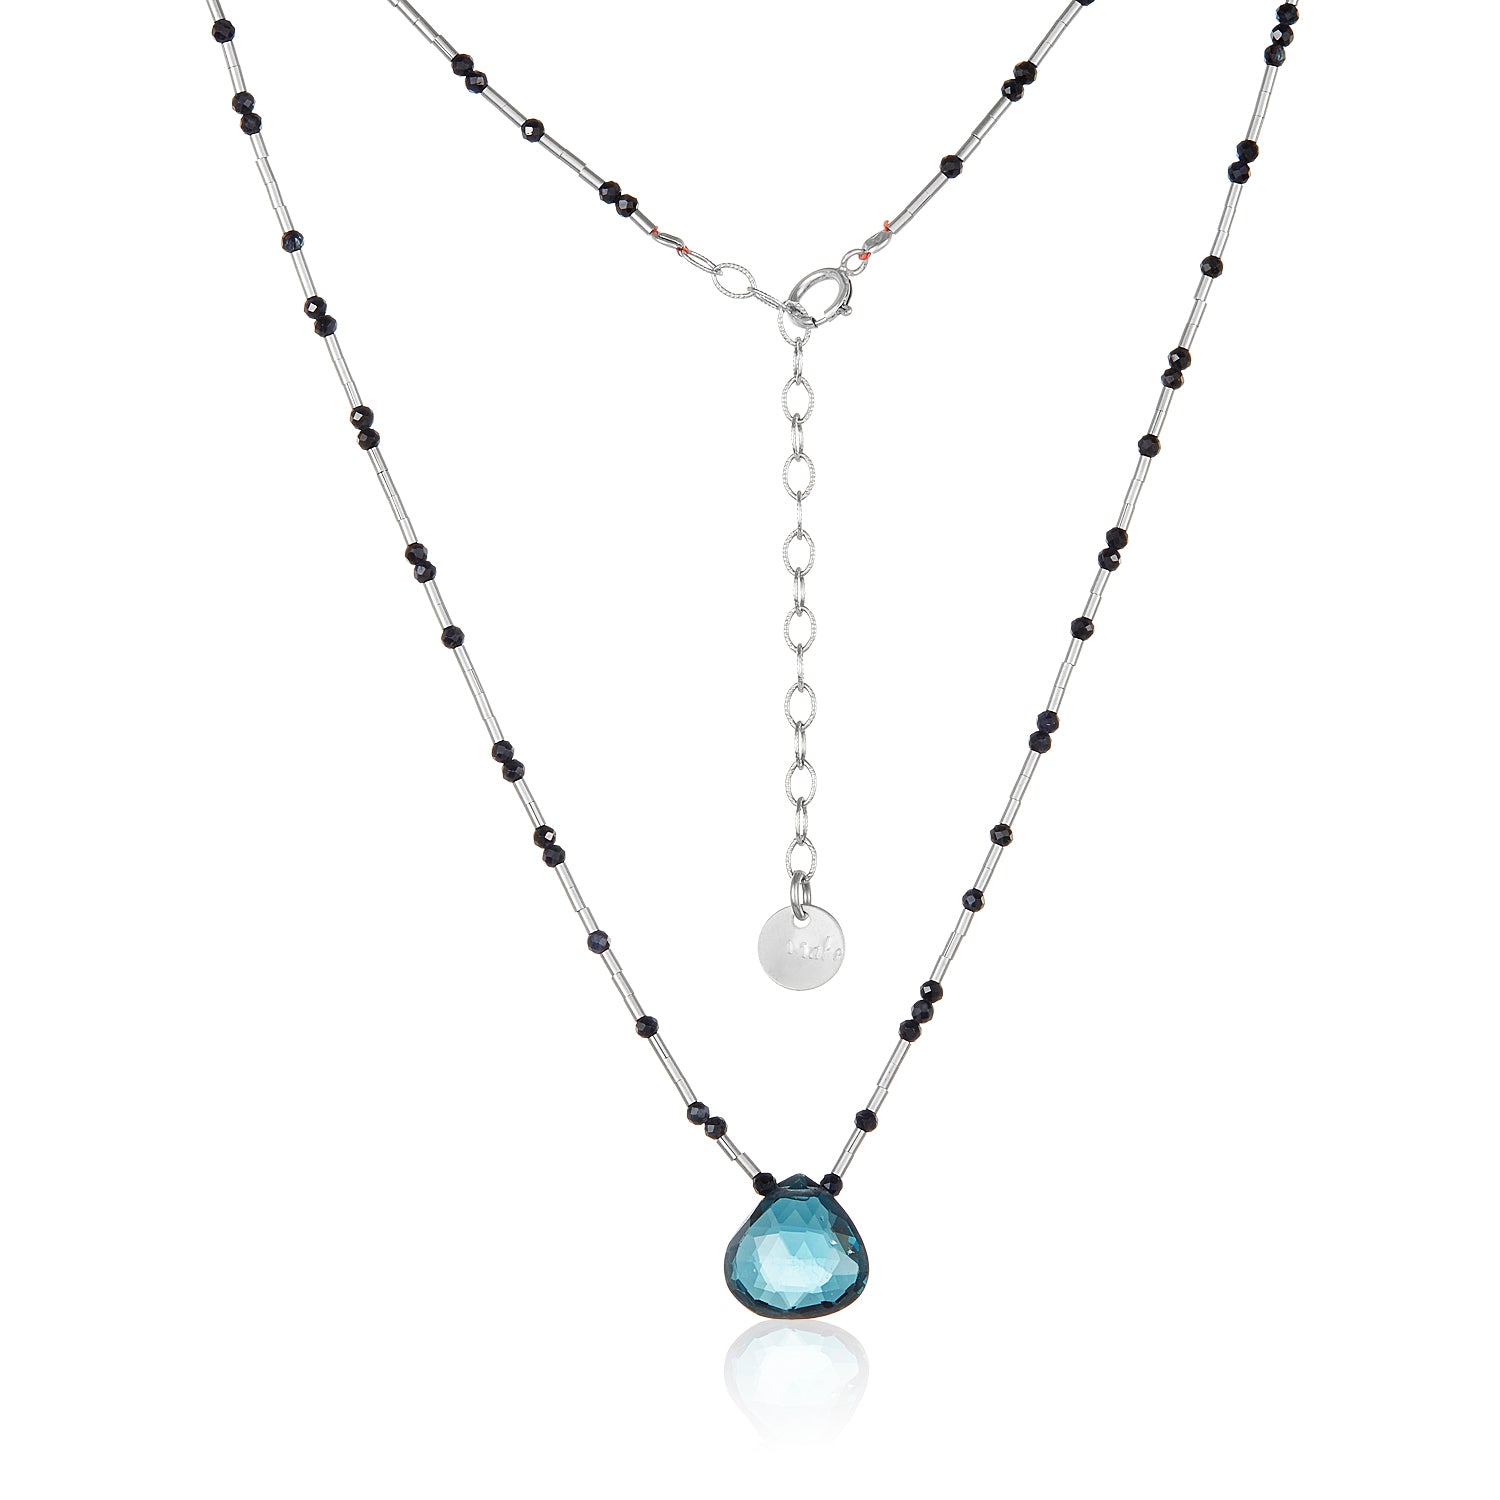 Blue Topaz sterling silver necklace